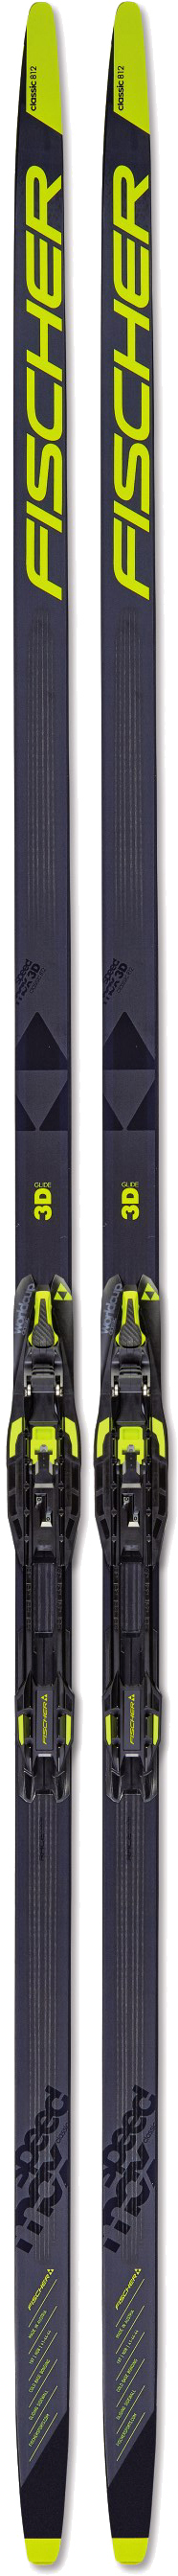 Бігові лижі Fischer Speedmax 3D Classic Plus 812 Medium IFP 197 см